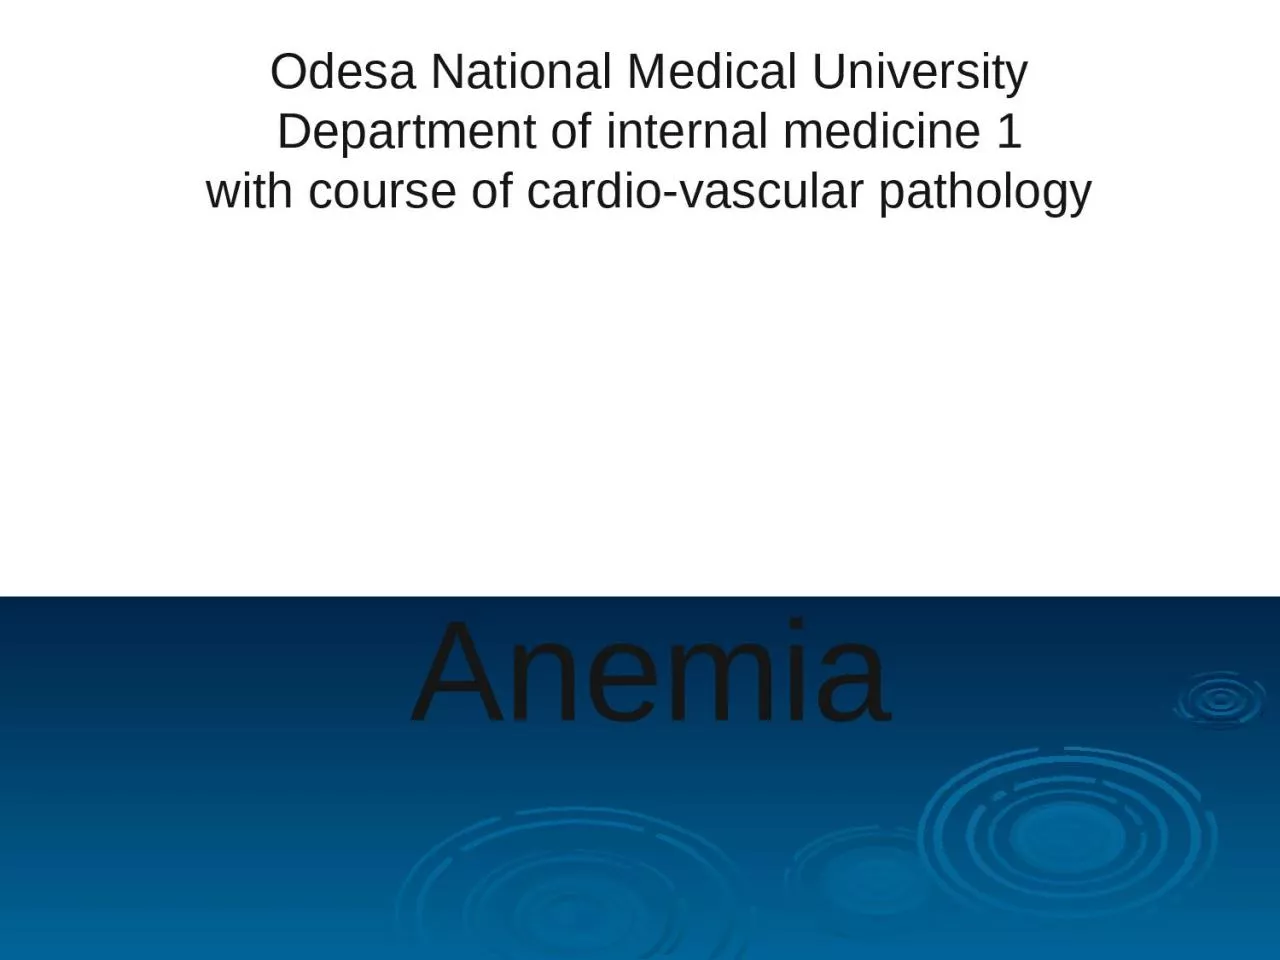 Anemia Odesa National Medical University